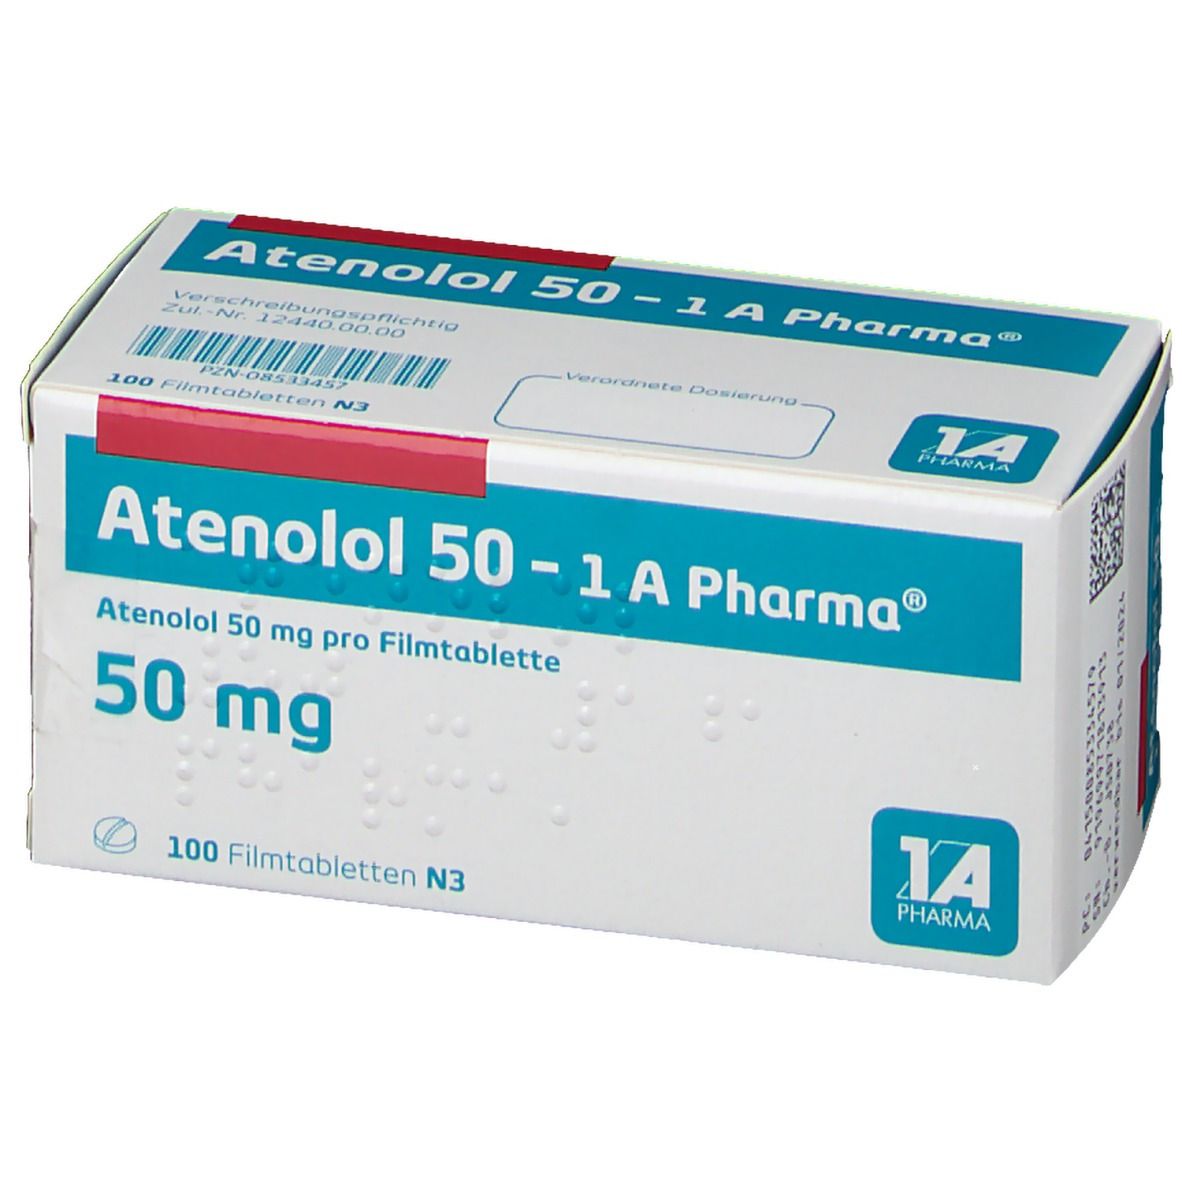 Atenolol 50 1A Pharma®